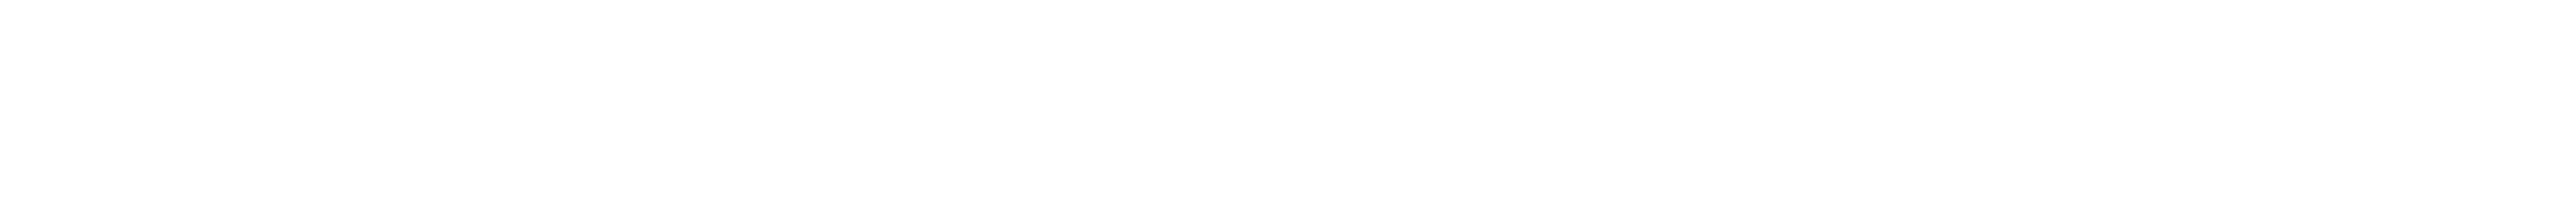 Newport Modern Dentistry's Desktop Logo